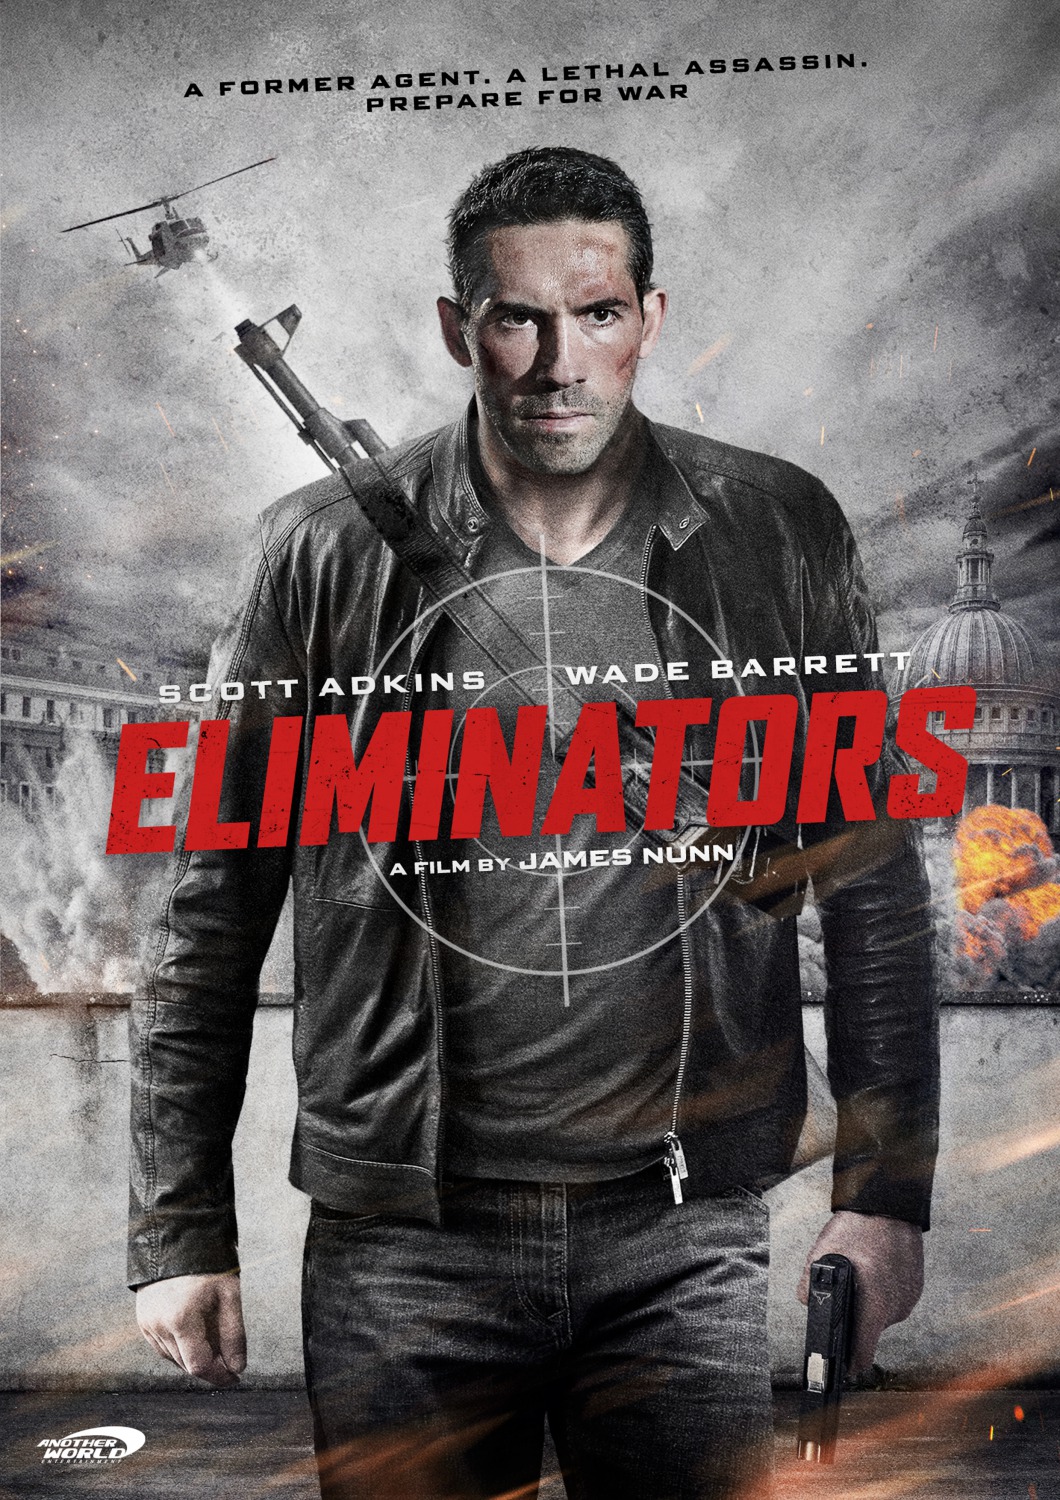 Extra Large Movie Poster Image for Eliminators 